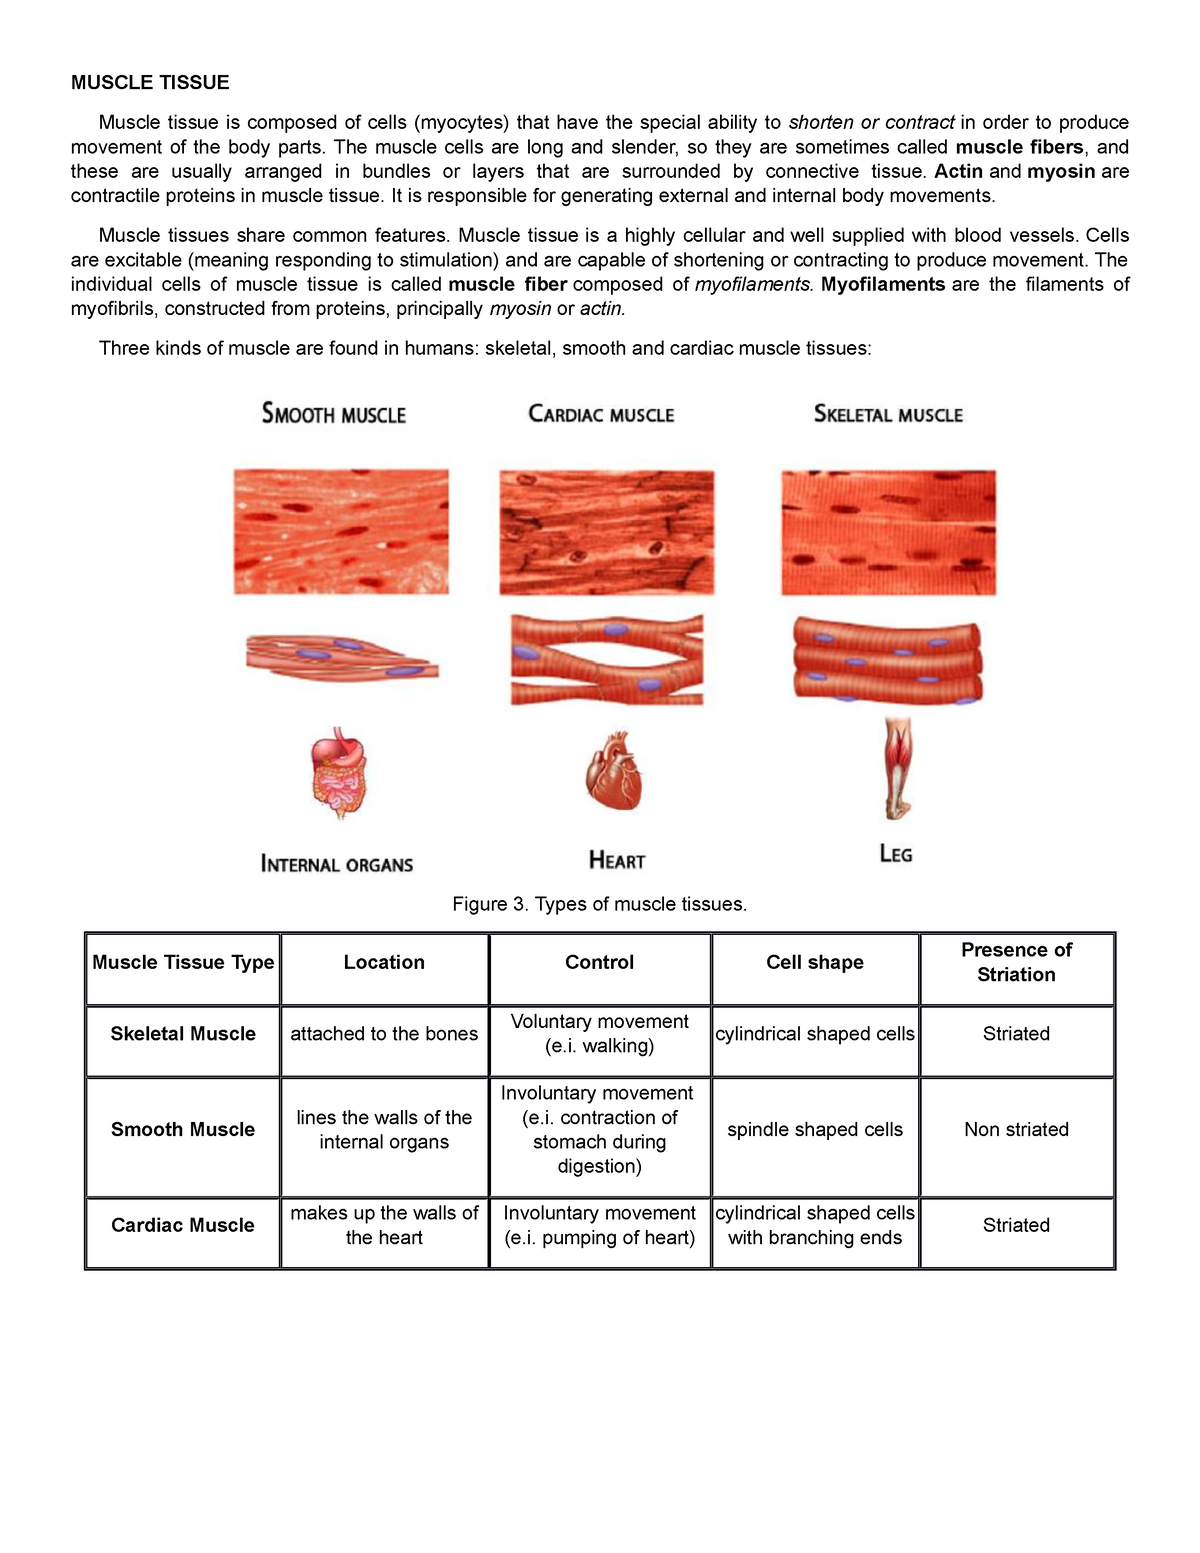 cardiac muscle cell shape